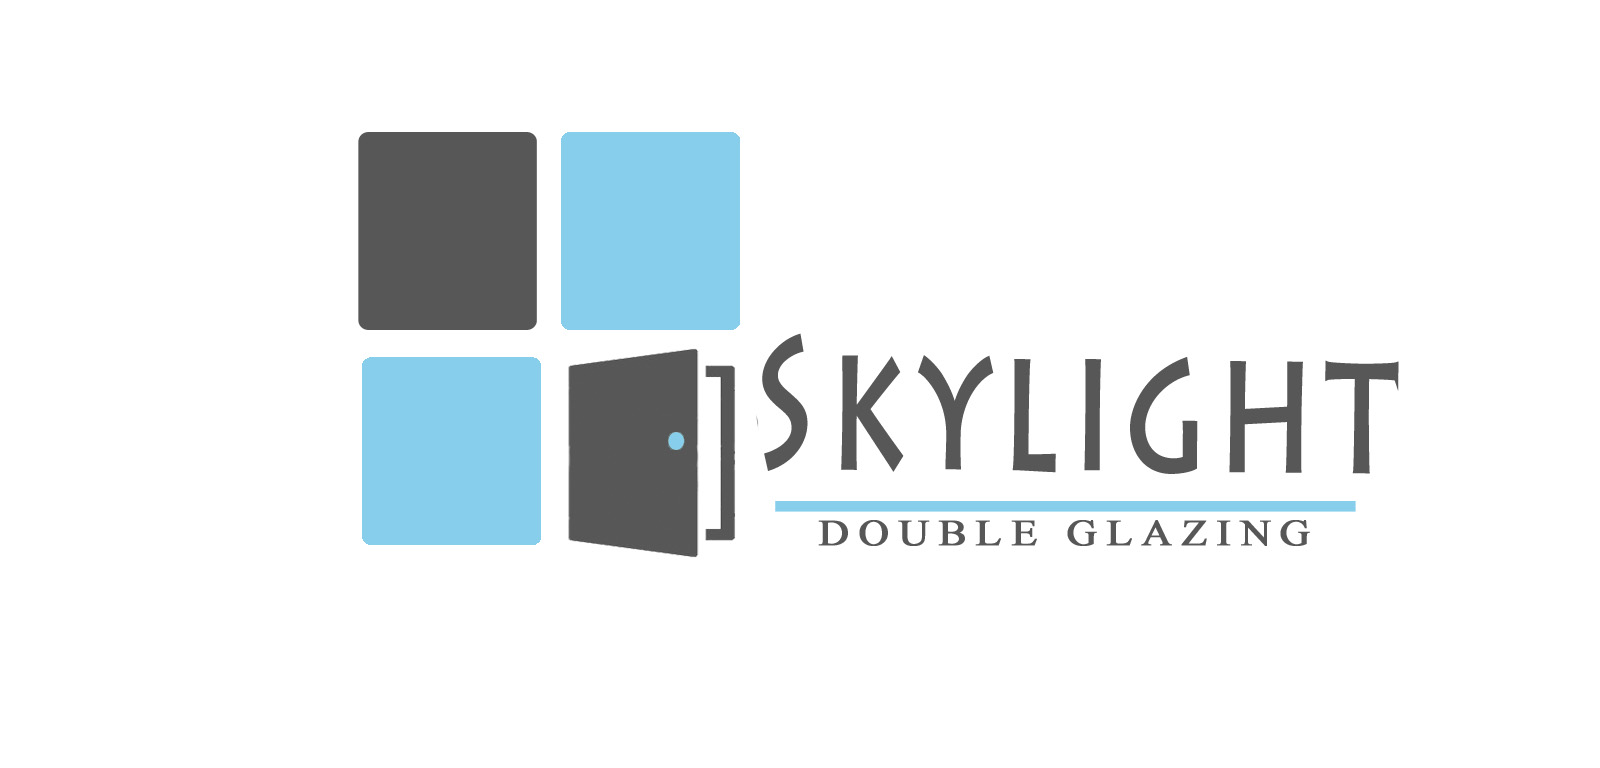 Skylight Double Glazing Limited